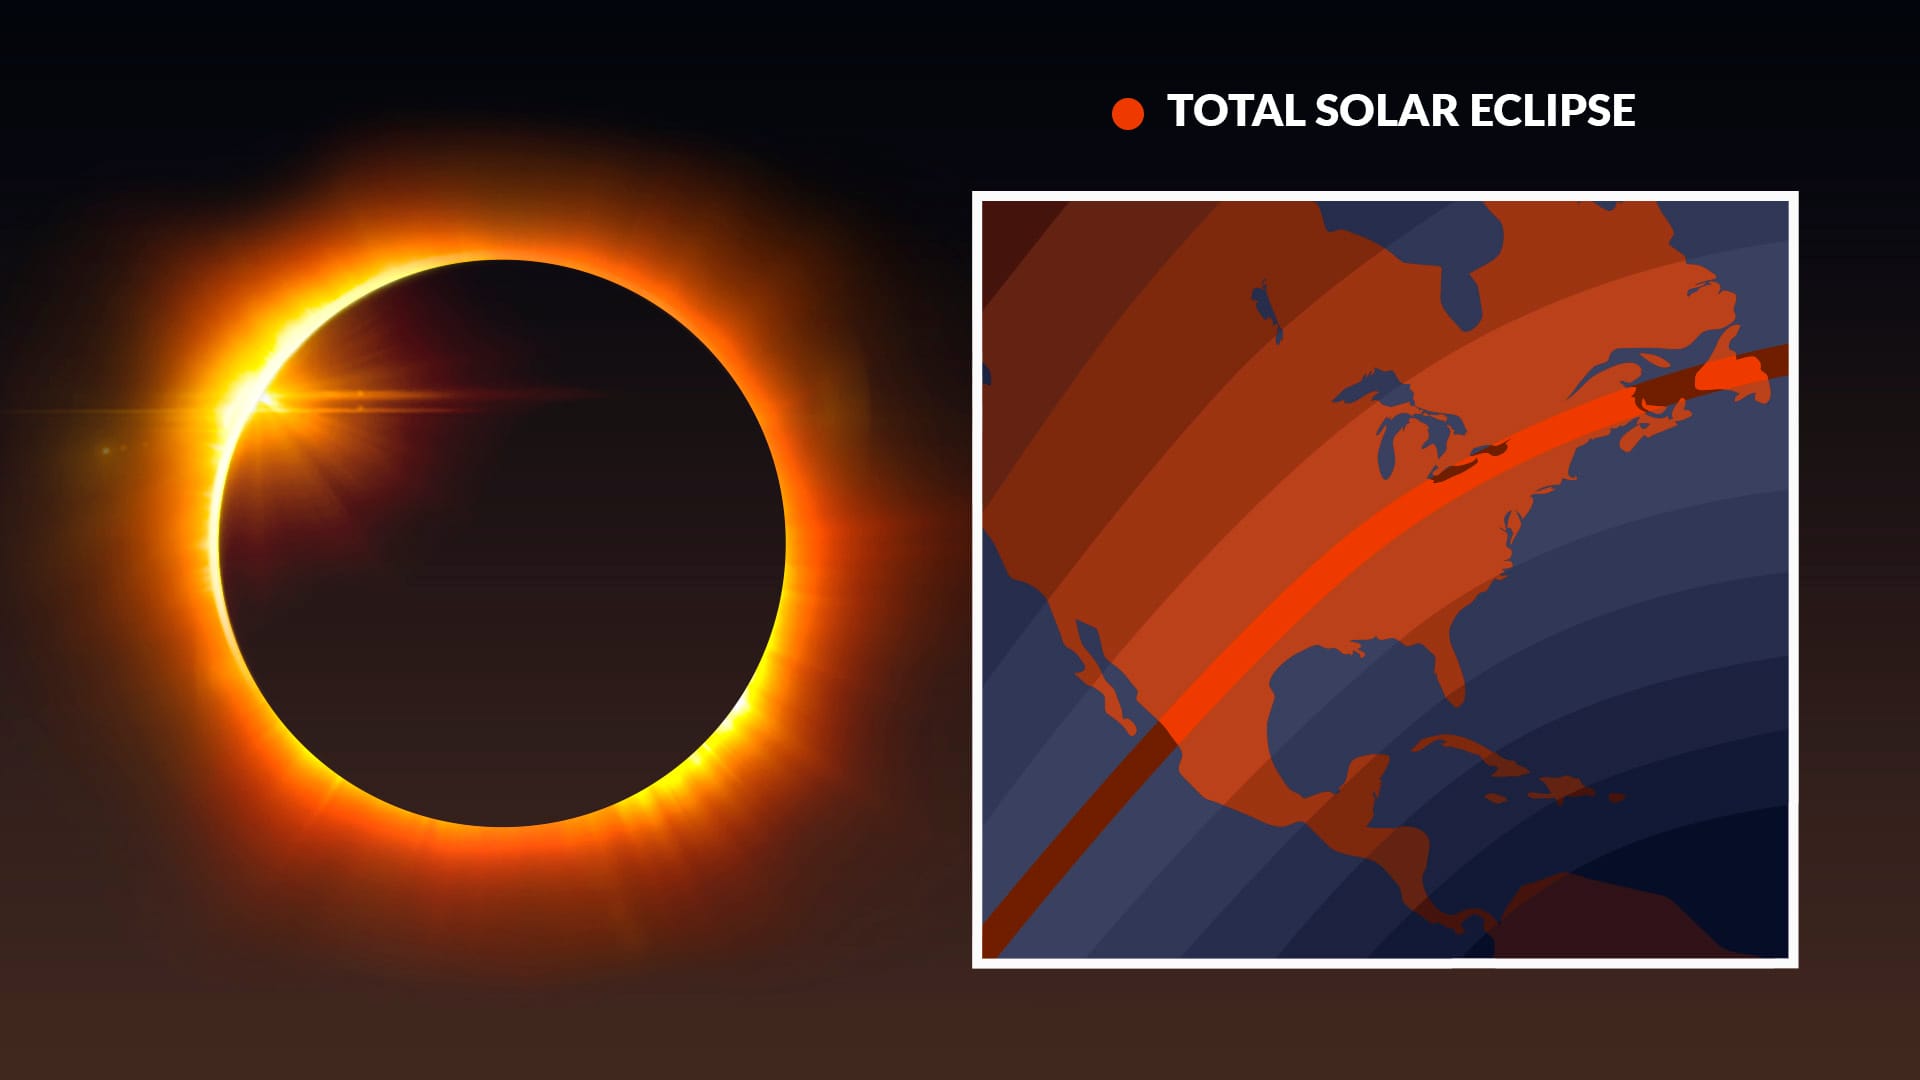 Total Solar Eclipse on April 8, 2024